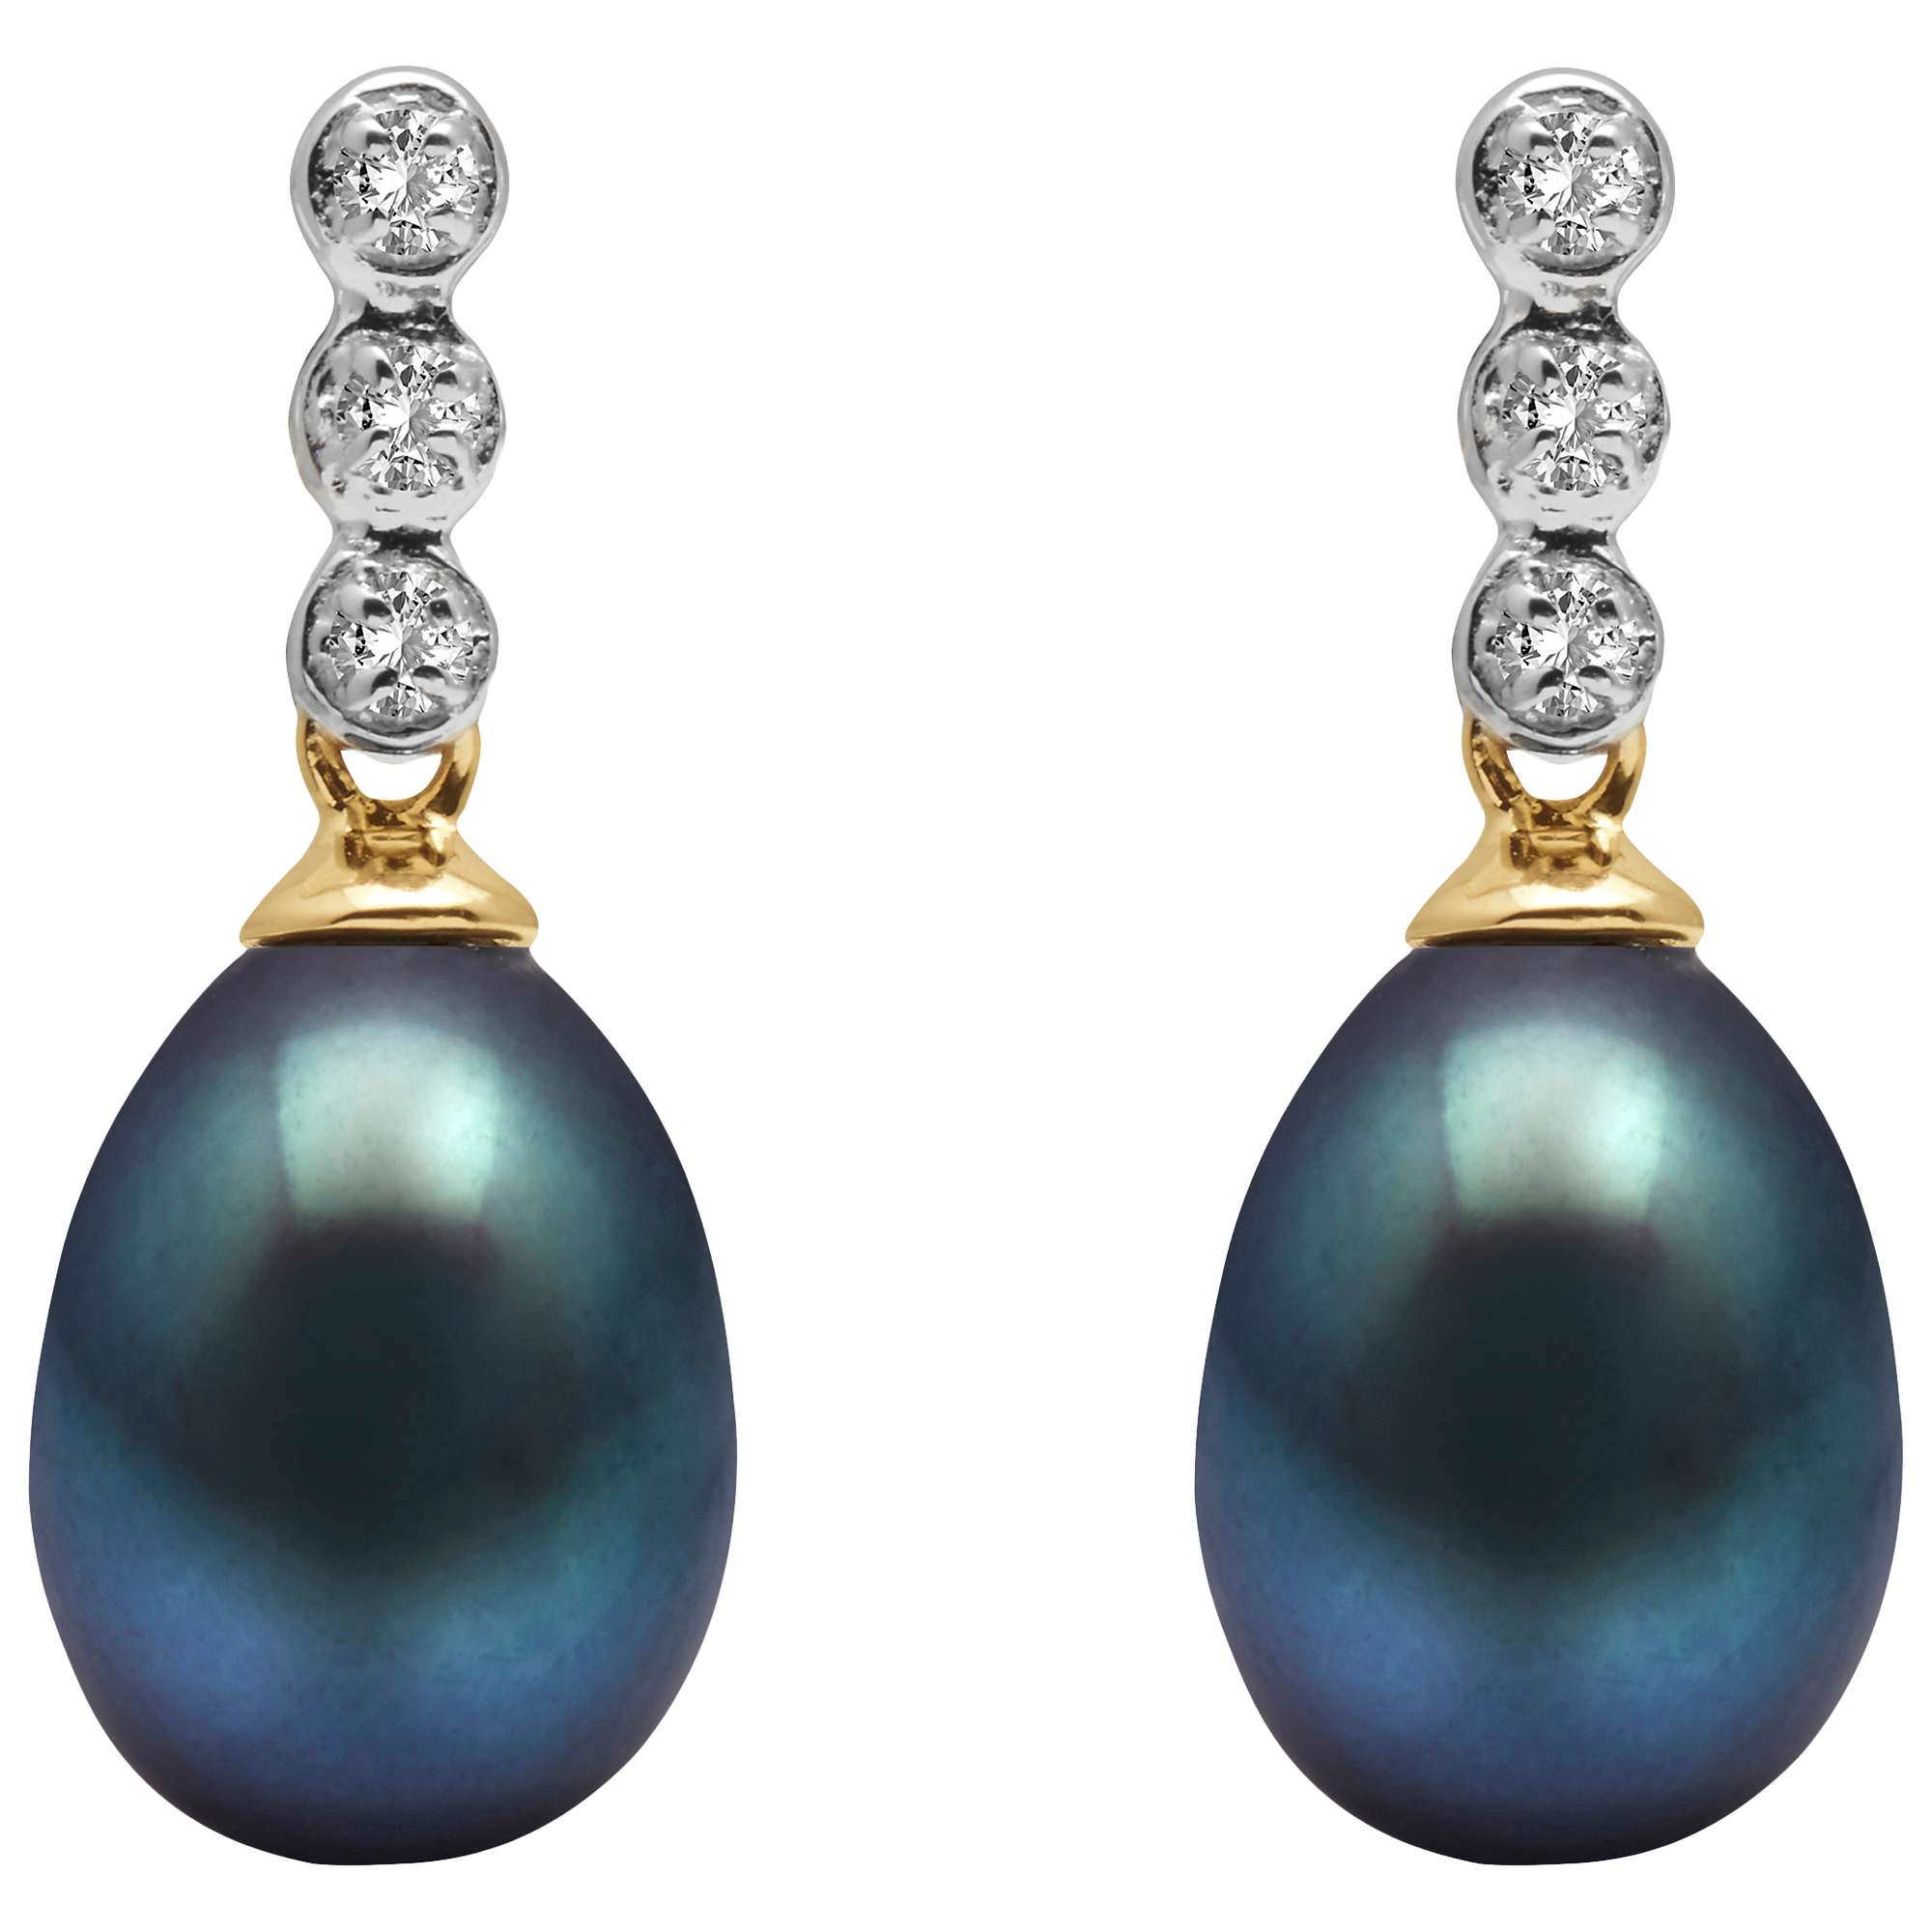 Buy A B Davis 9ct Gold Freshwater Pearl Three Diamond Drop Earrings Online at johnlewis.com